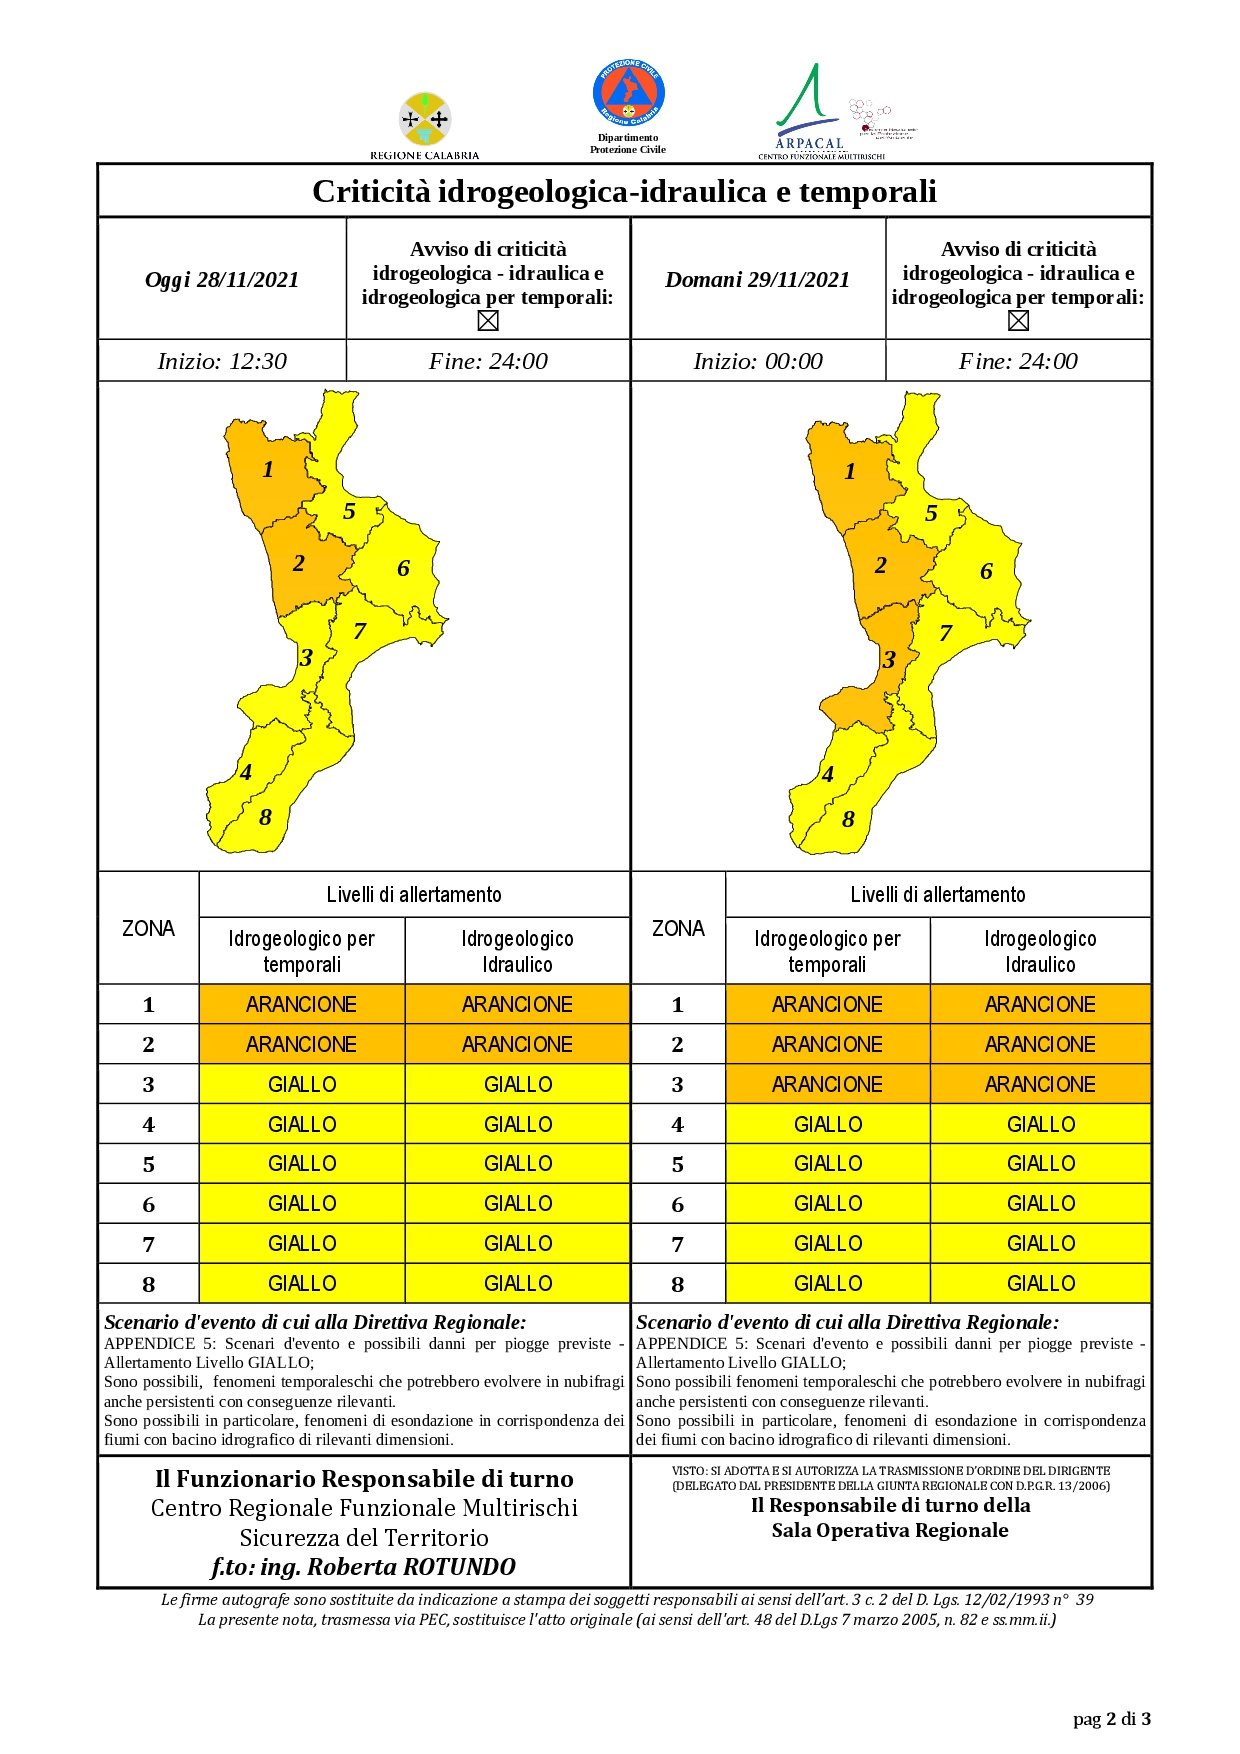 Criticità idrogeologica-idraulica e temporali in Calabria 28-11-2021